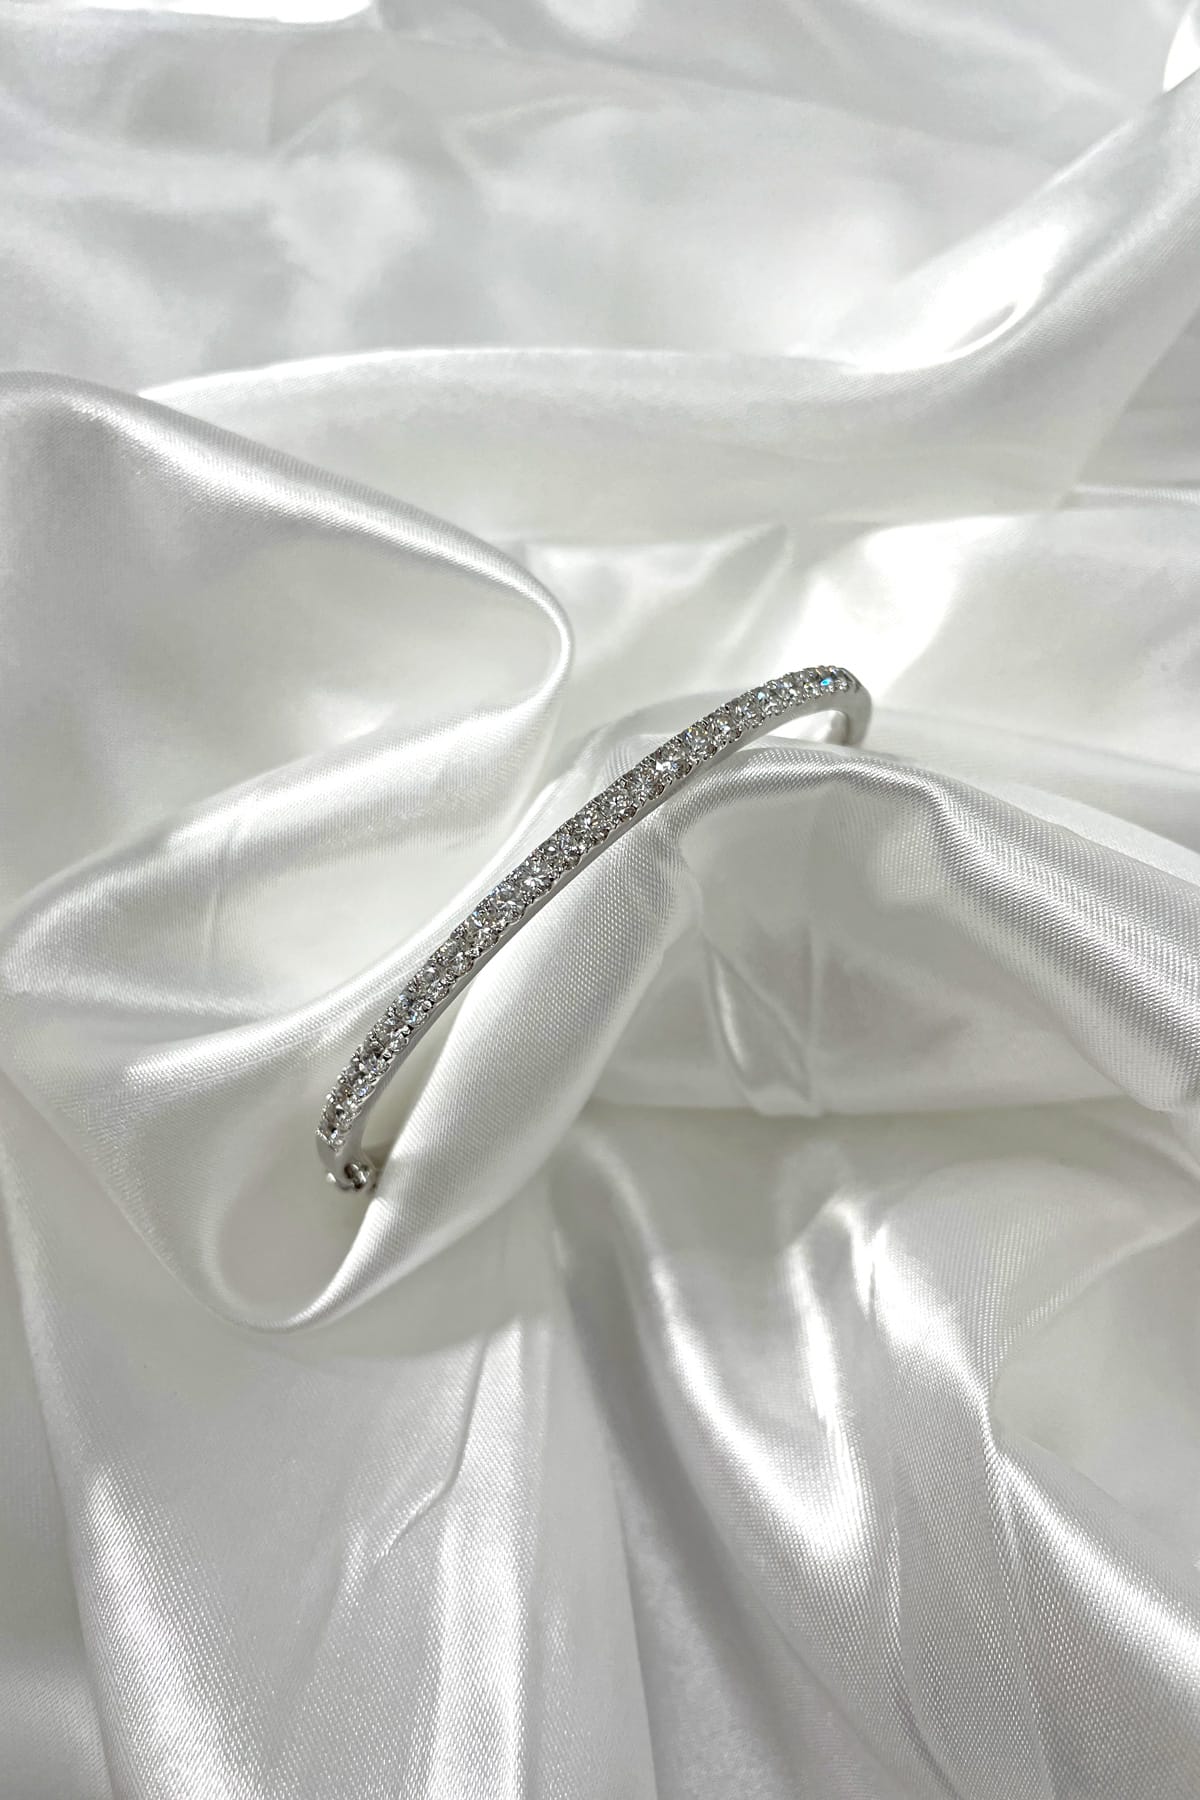 18 Carat White Gold Diamond Set Bangle available at LeGassick Diamonds and Jewellery Gold Coast, Australia.